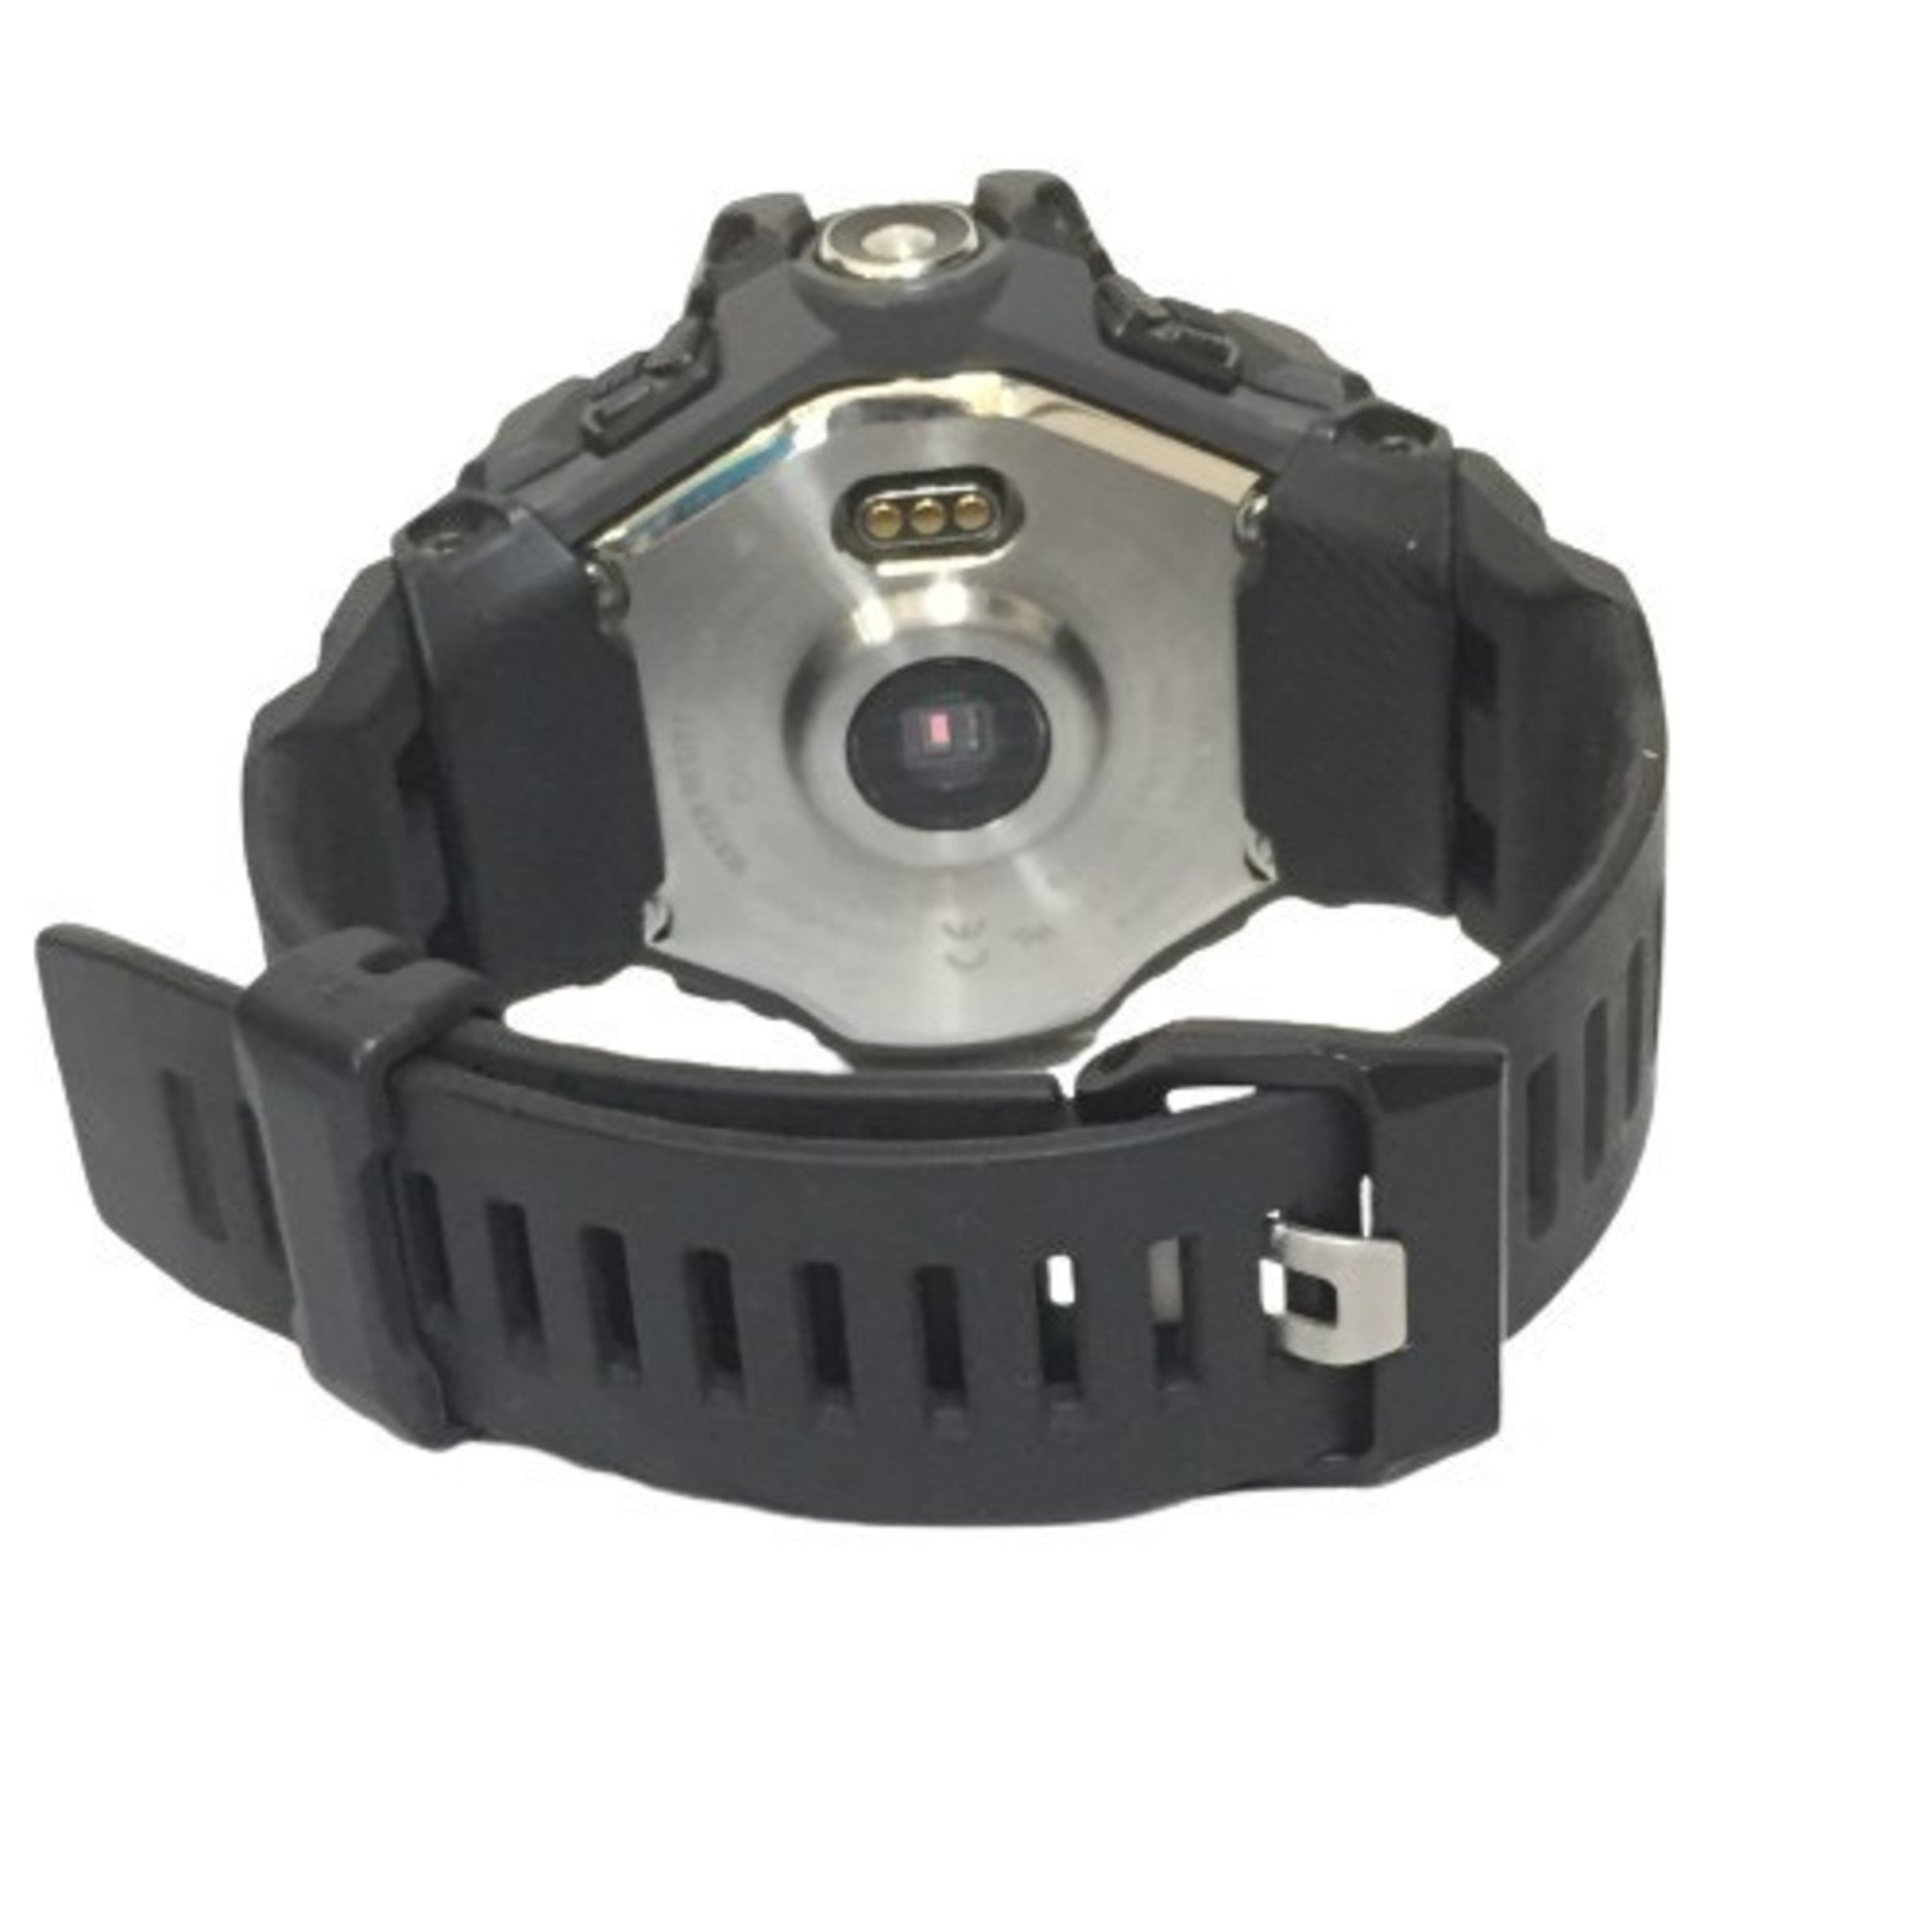 G-SHOCK CASIO Watch GBD-H1000-1JR G-SQUAD Training Gear GPS Function Smartphone Link USB Charging Solar Assist Black Men's Digital Kaizuka Store IT2AYJ14P5YO RK1187D